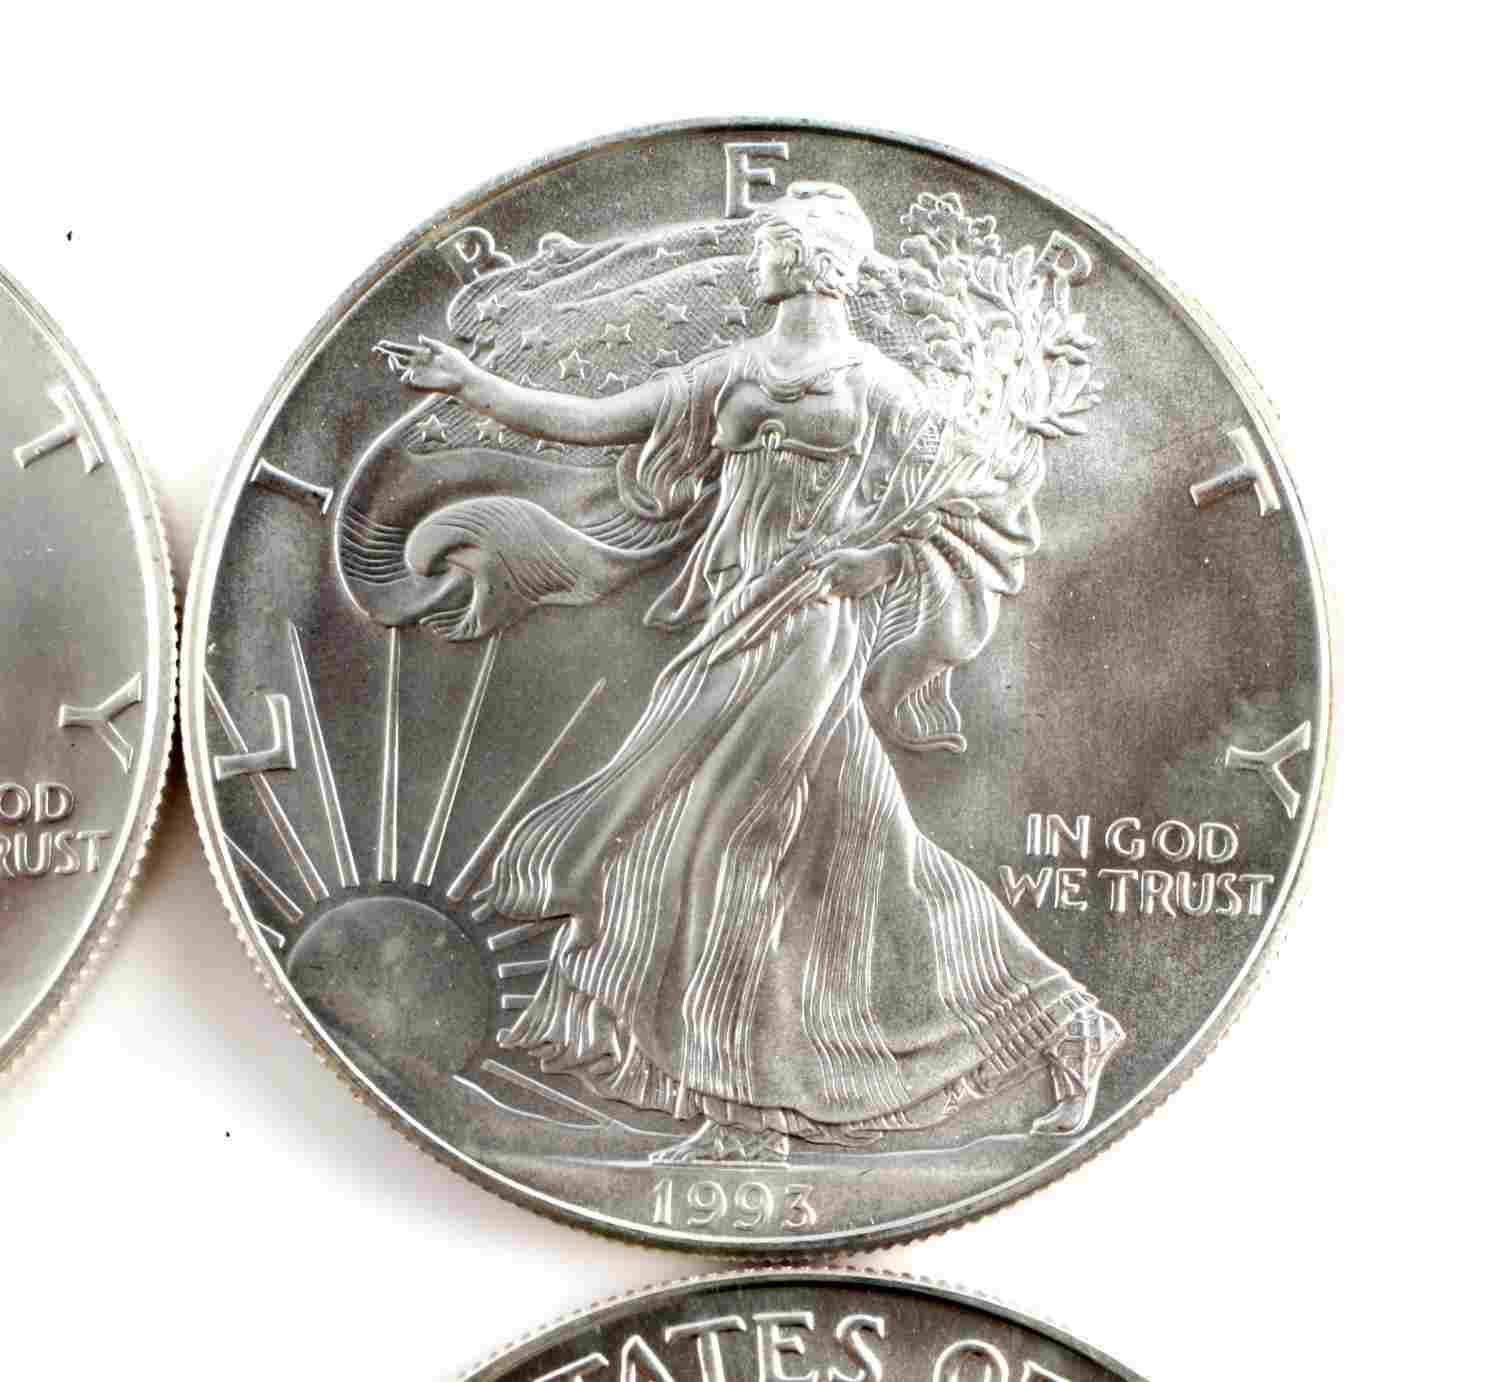 1993 AMERICAN SILVER EAGLE COIN LOT OF 8 BU